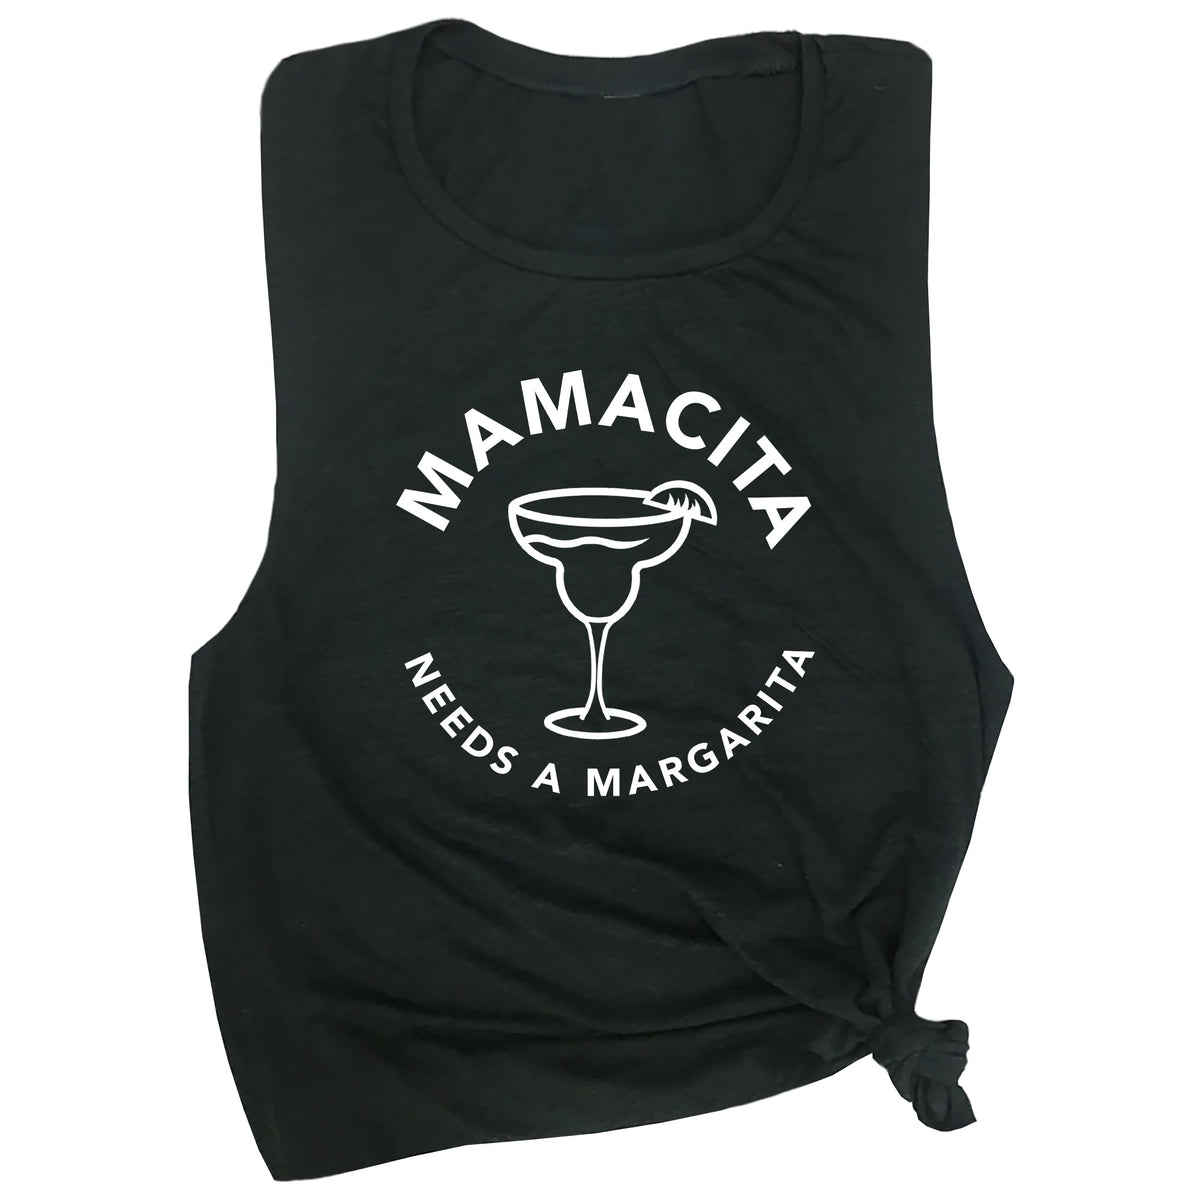 Mamacita Needs a Margarita Muscle Tee